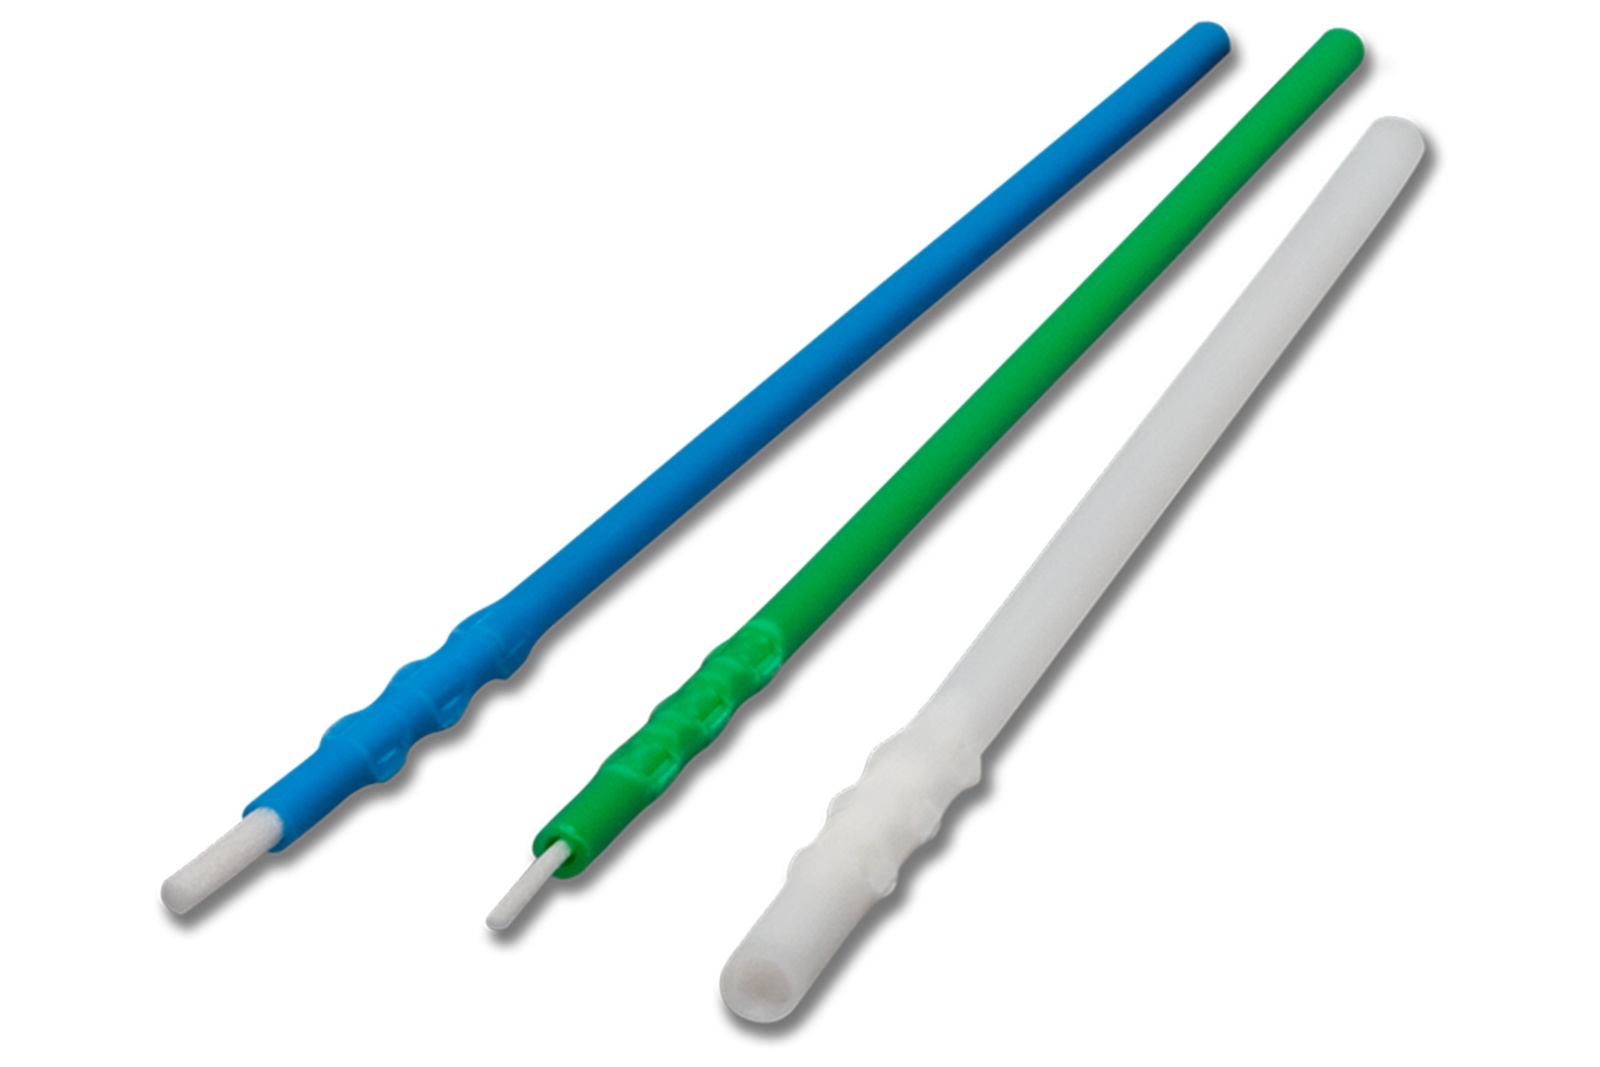 sticklers fiber optic swabs commercial mix 2.5mm stixx 1.25mm stixx pin termini stixx blue white green mcc vs